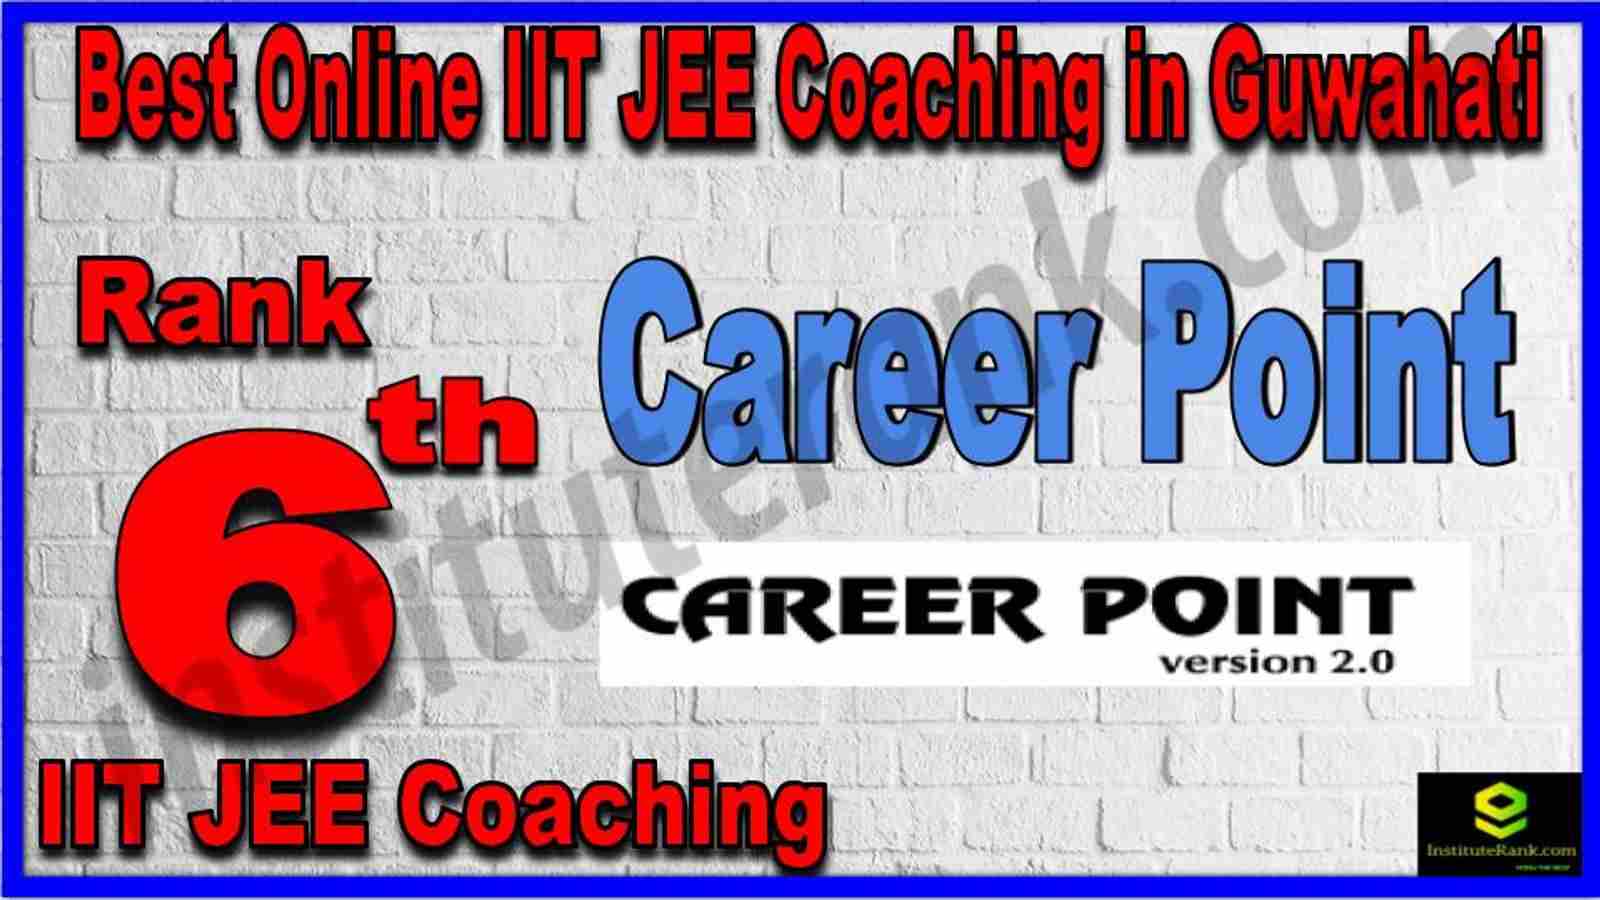 Rank 6th Best Online IIT JEE Coaching in Guwahati